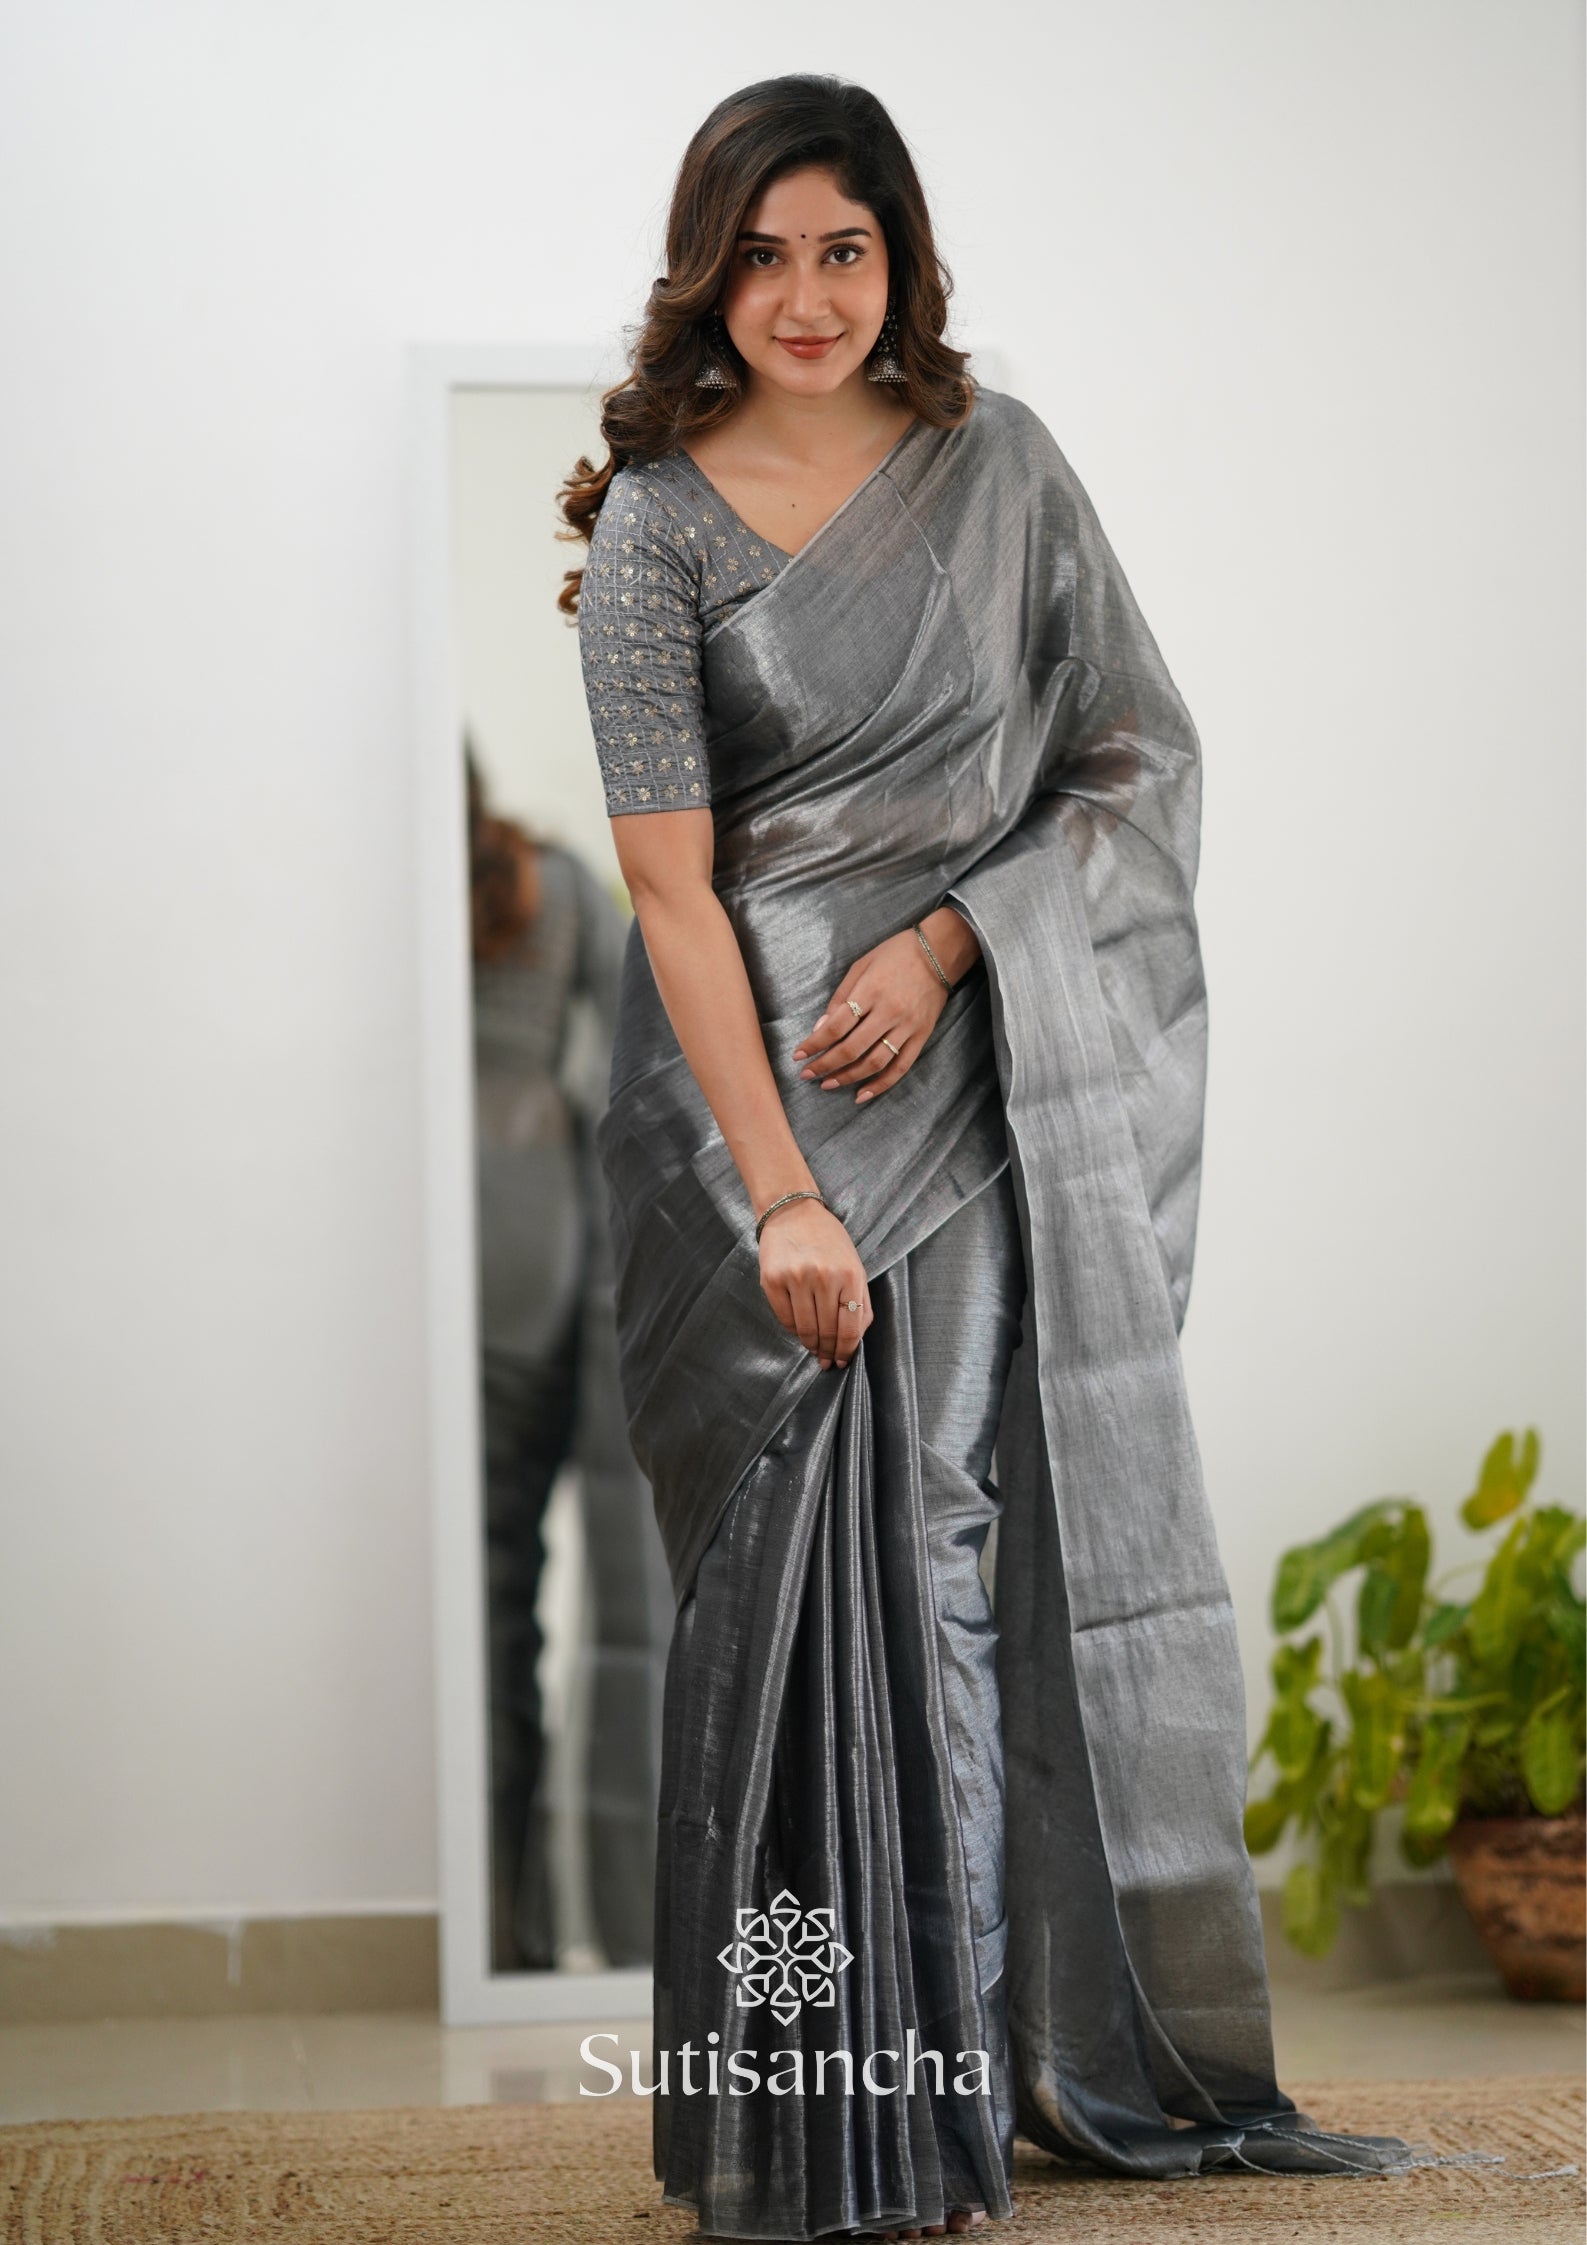 Sutisancha Grey Handloom Tissue Saree With Designer Blouse